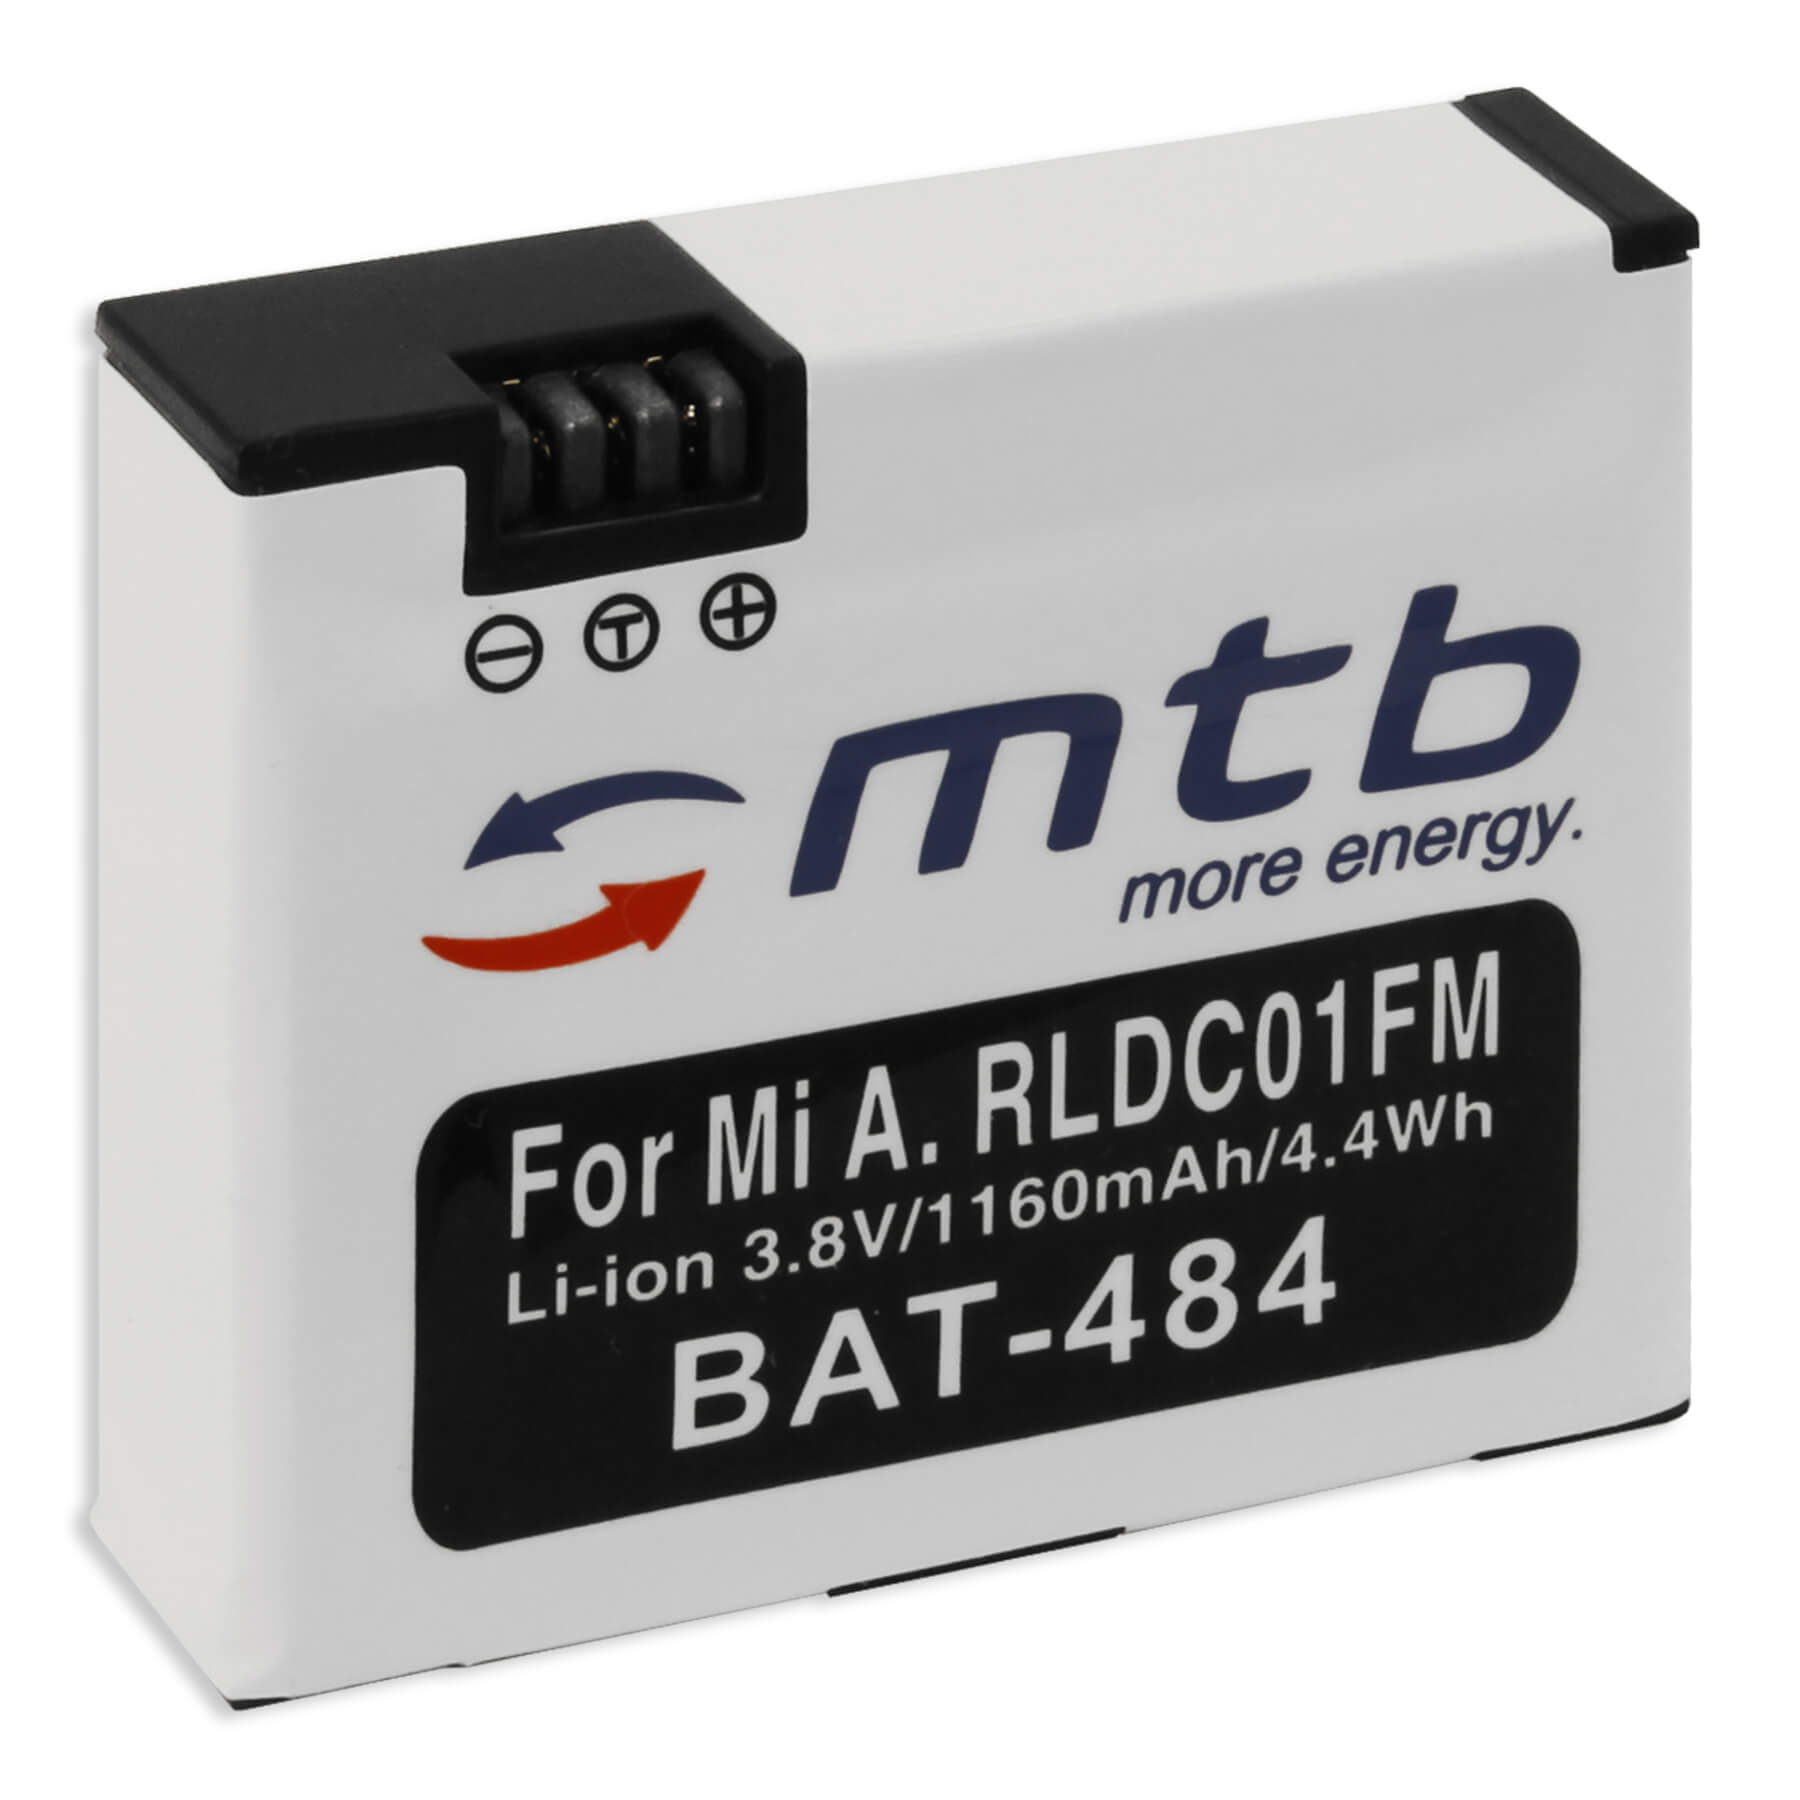 mAh RLDC01FM MTB ENERGY 1160 BAT-484 MORE Li-Ion, Akku,